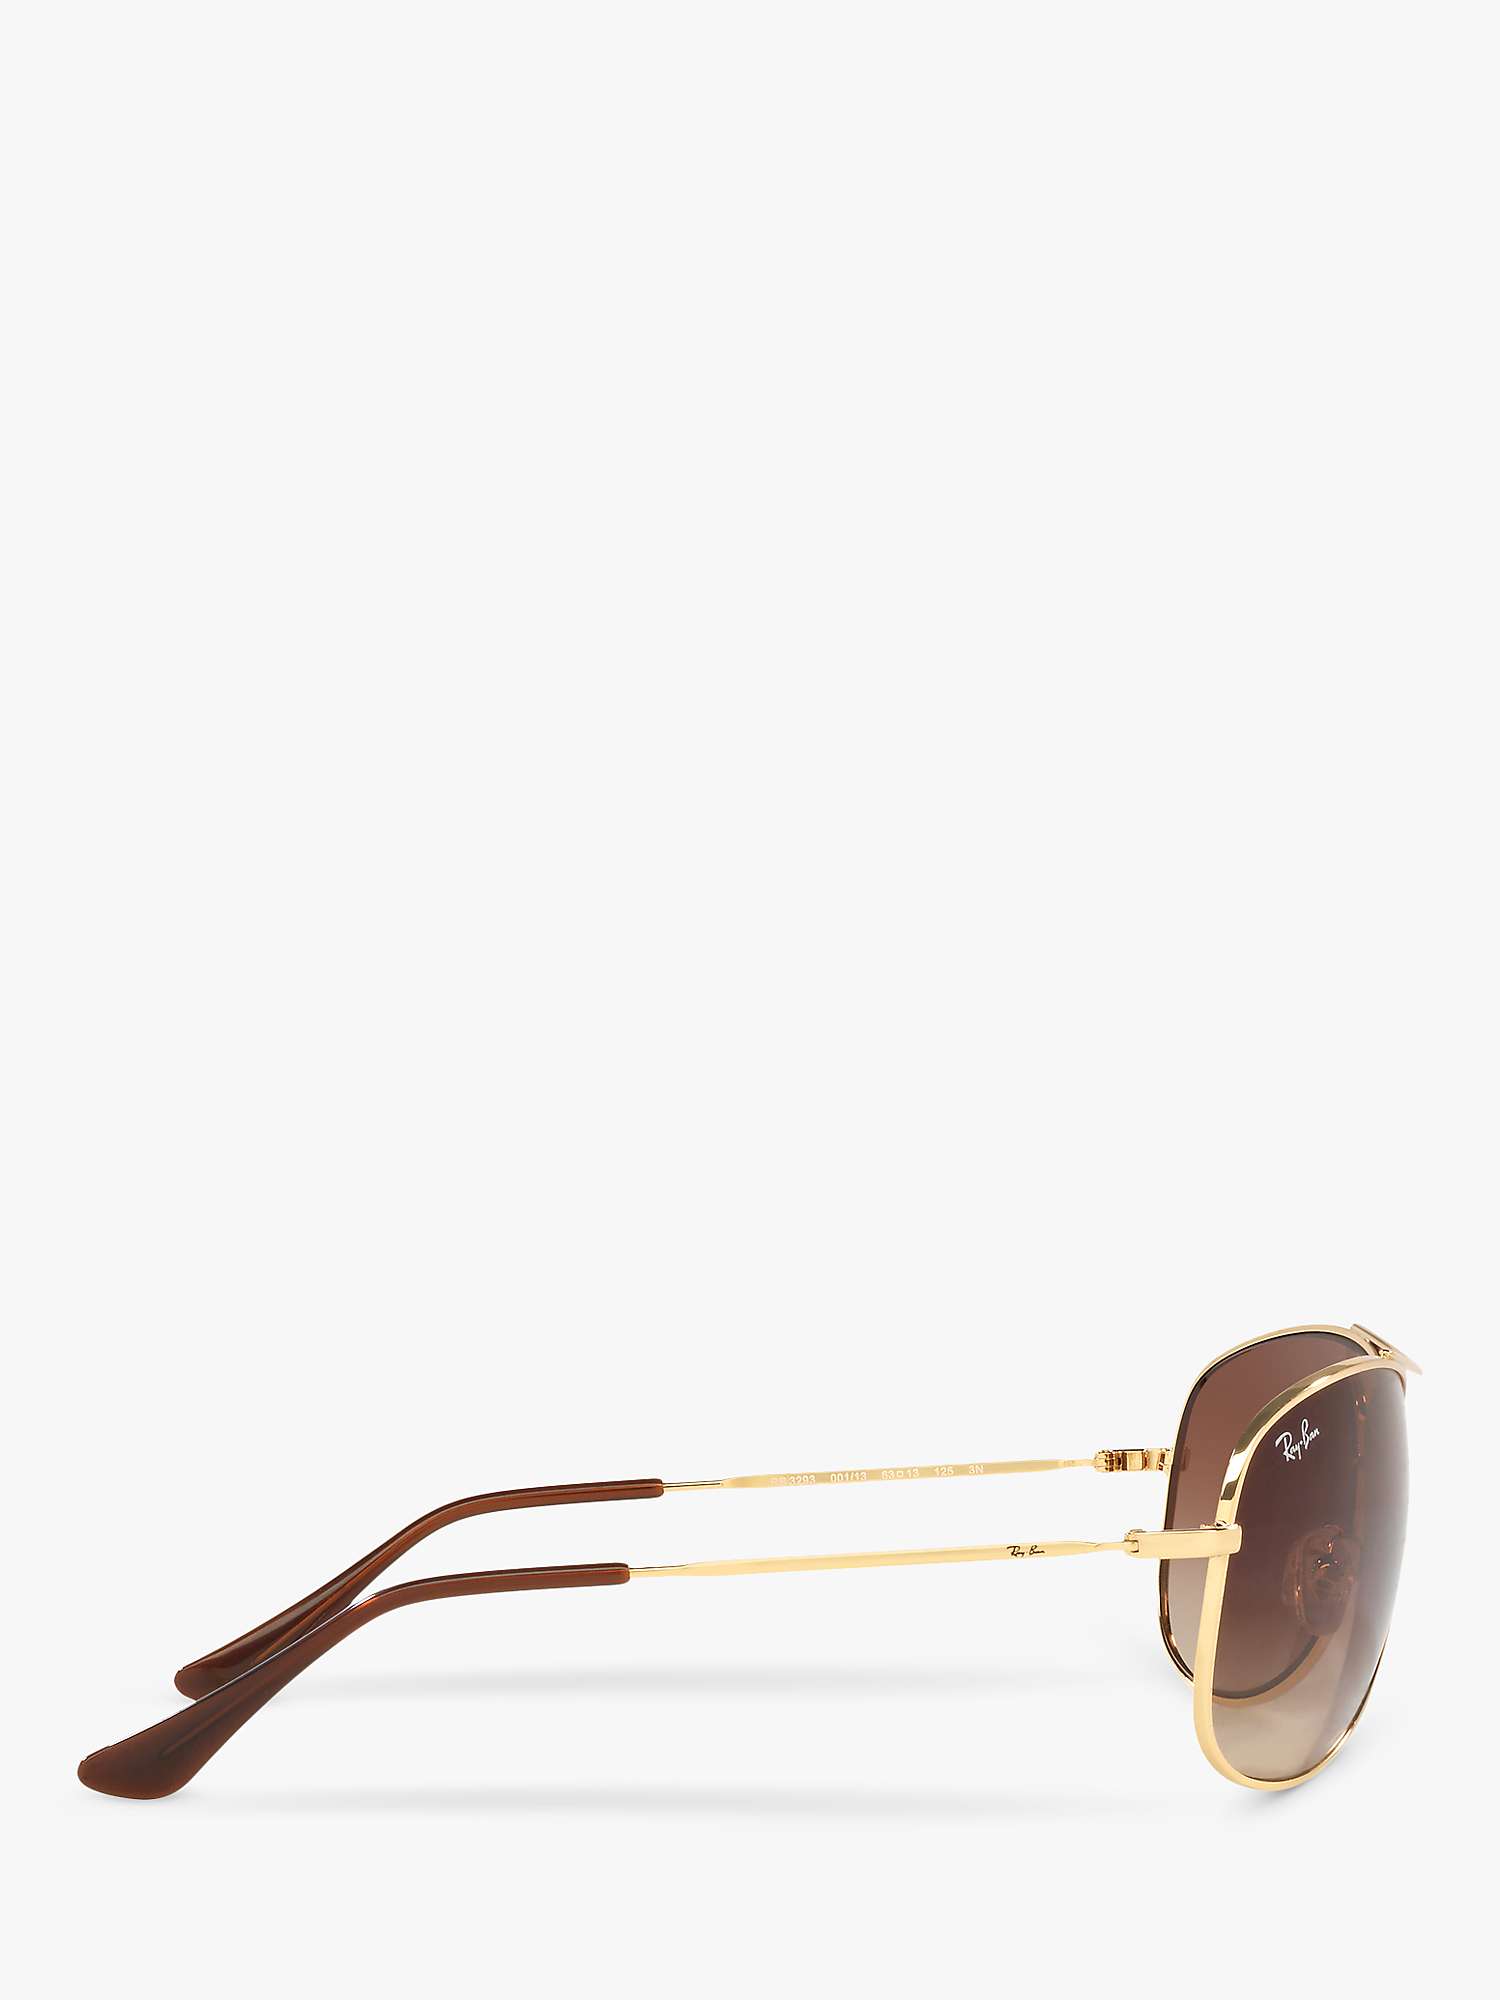 Buy Ray-Ban RB3293 Men's Aviator Sunglasses, Gold/Brown Gradient Online at johnlewis.com